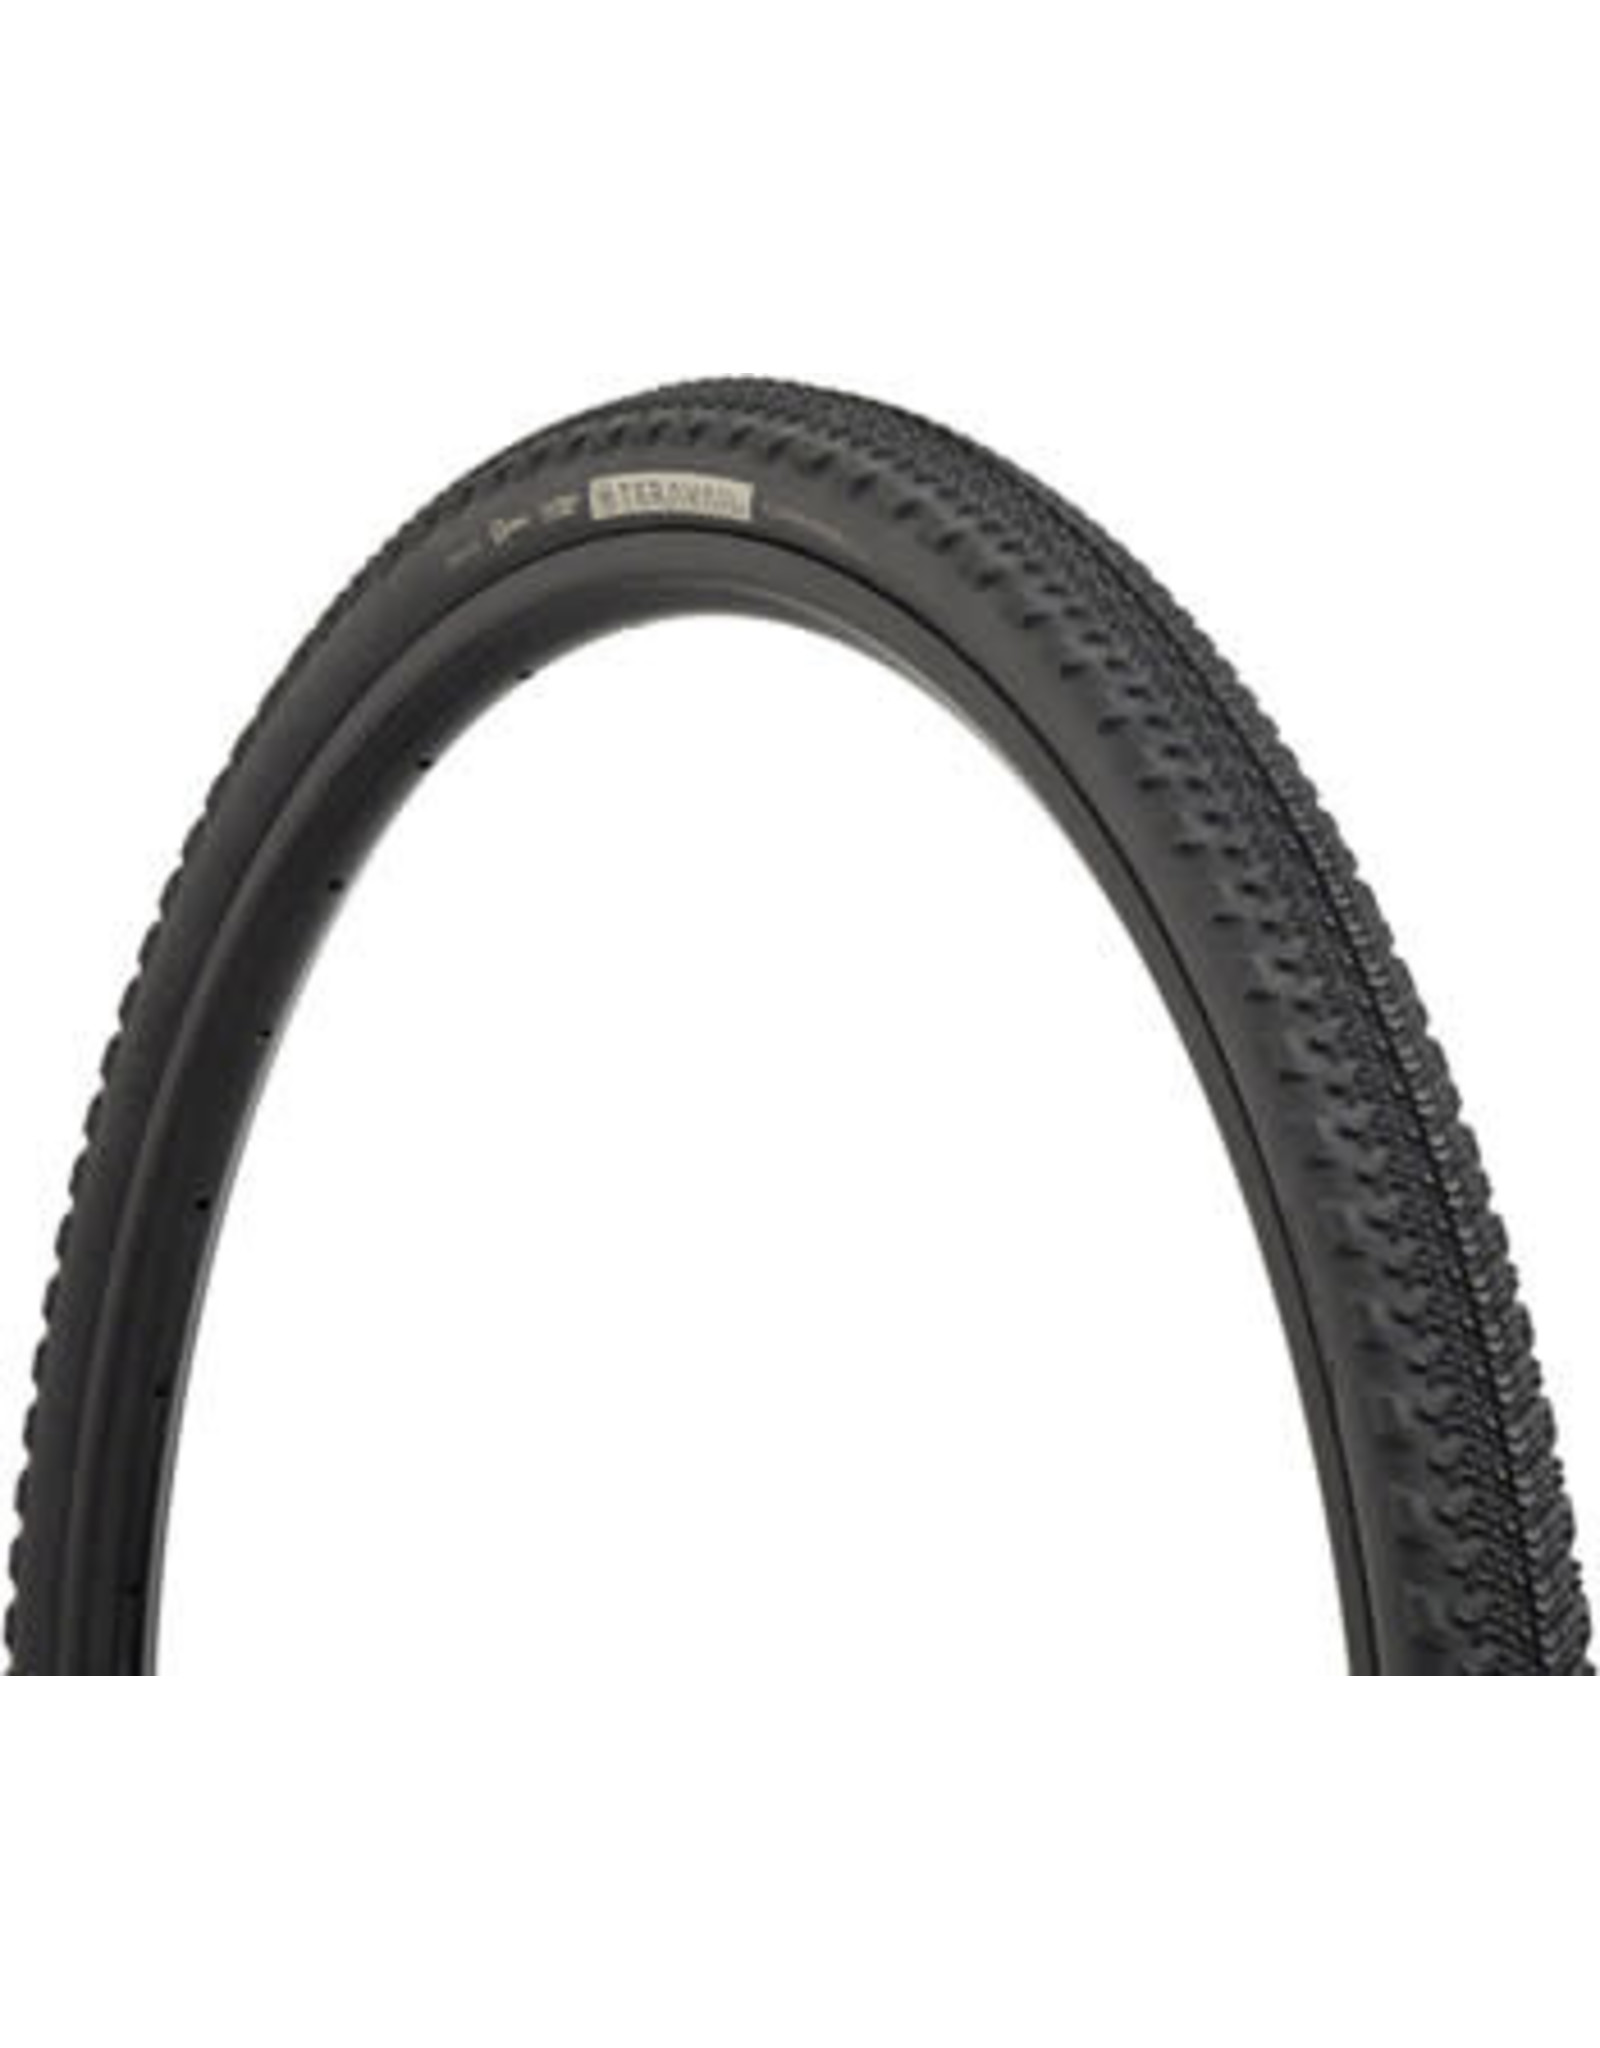 Teravail Teravail Cannonball Tire Tubeless Folding 700c Durable Black 700c x 42